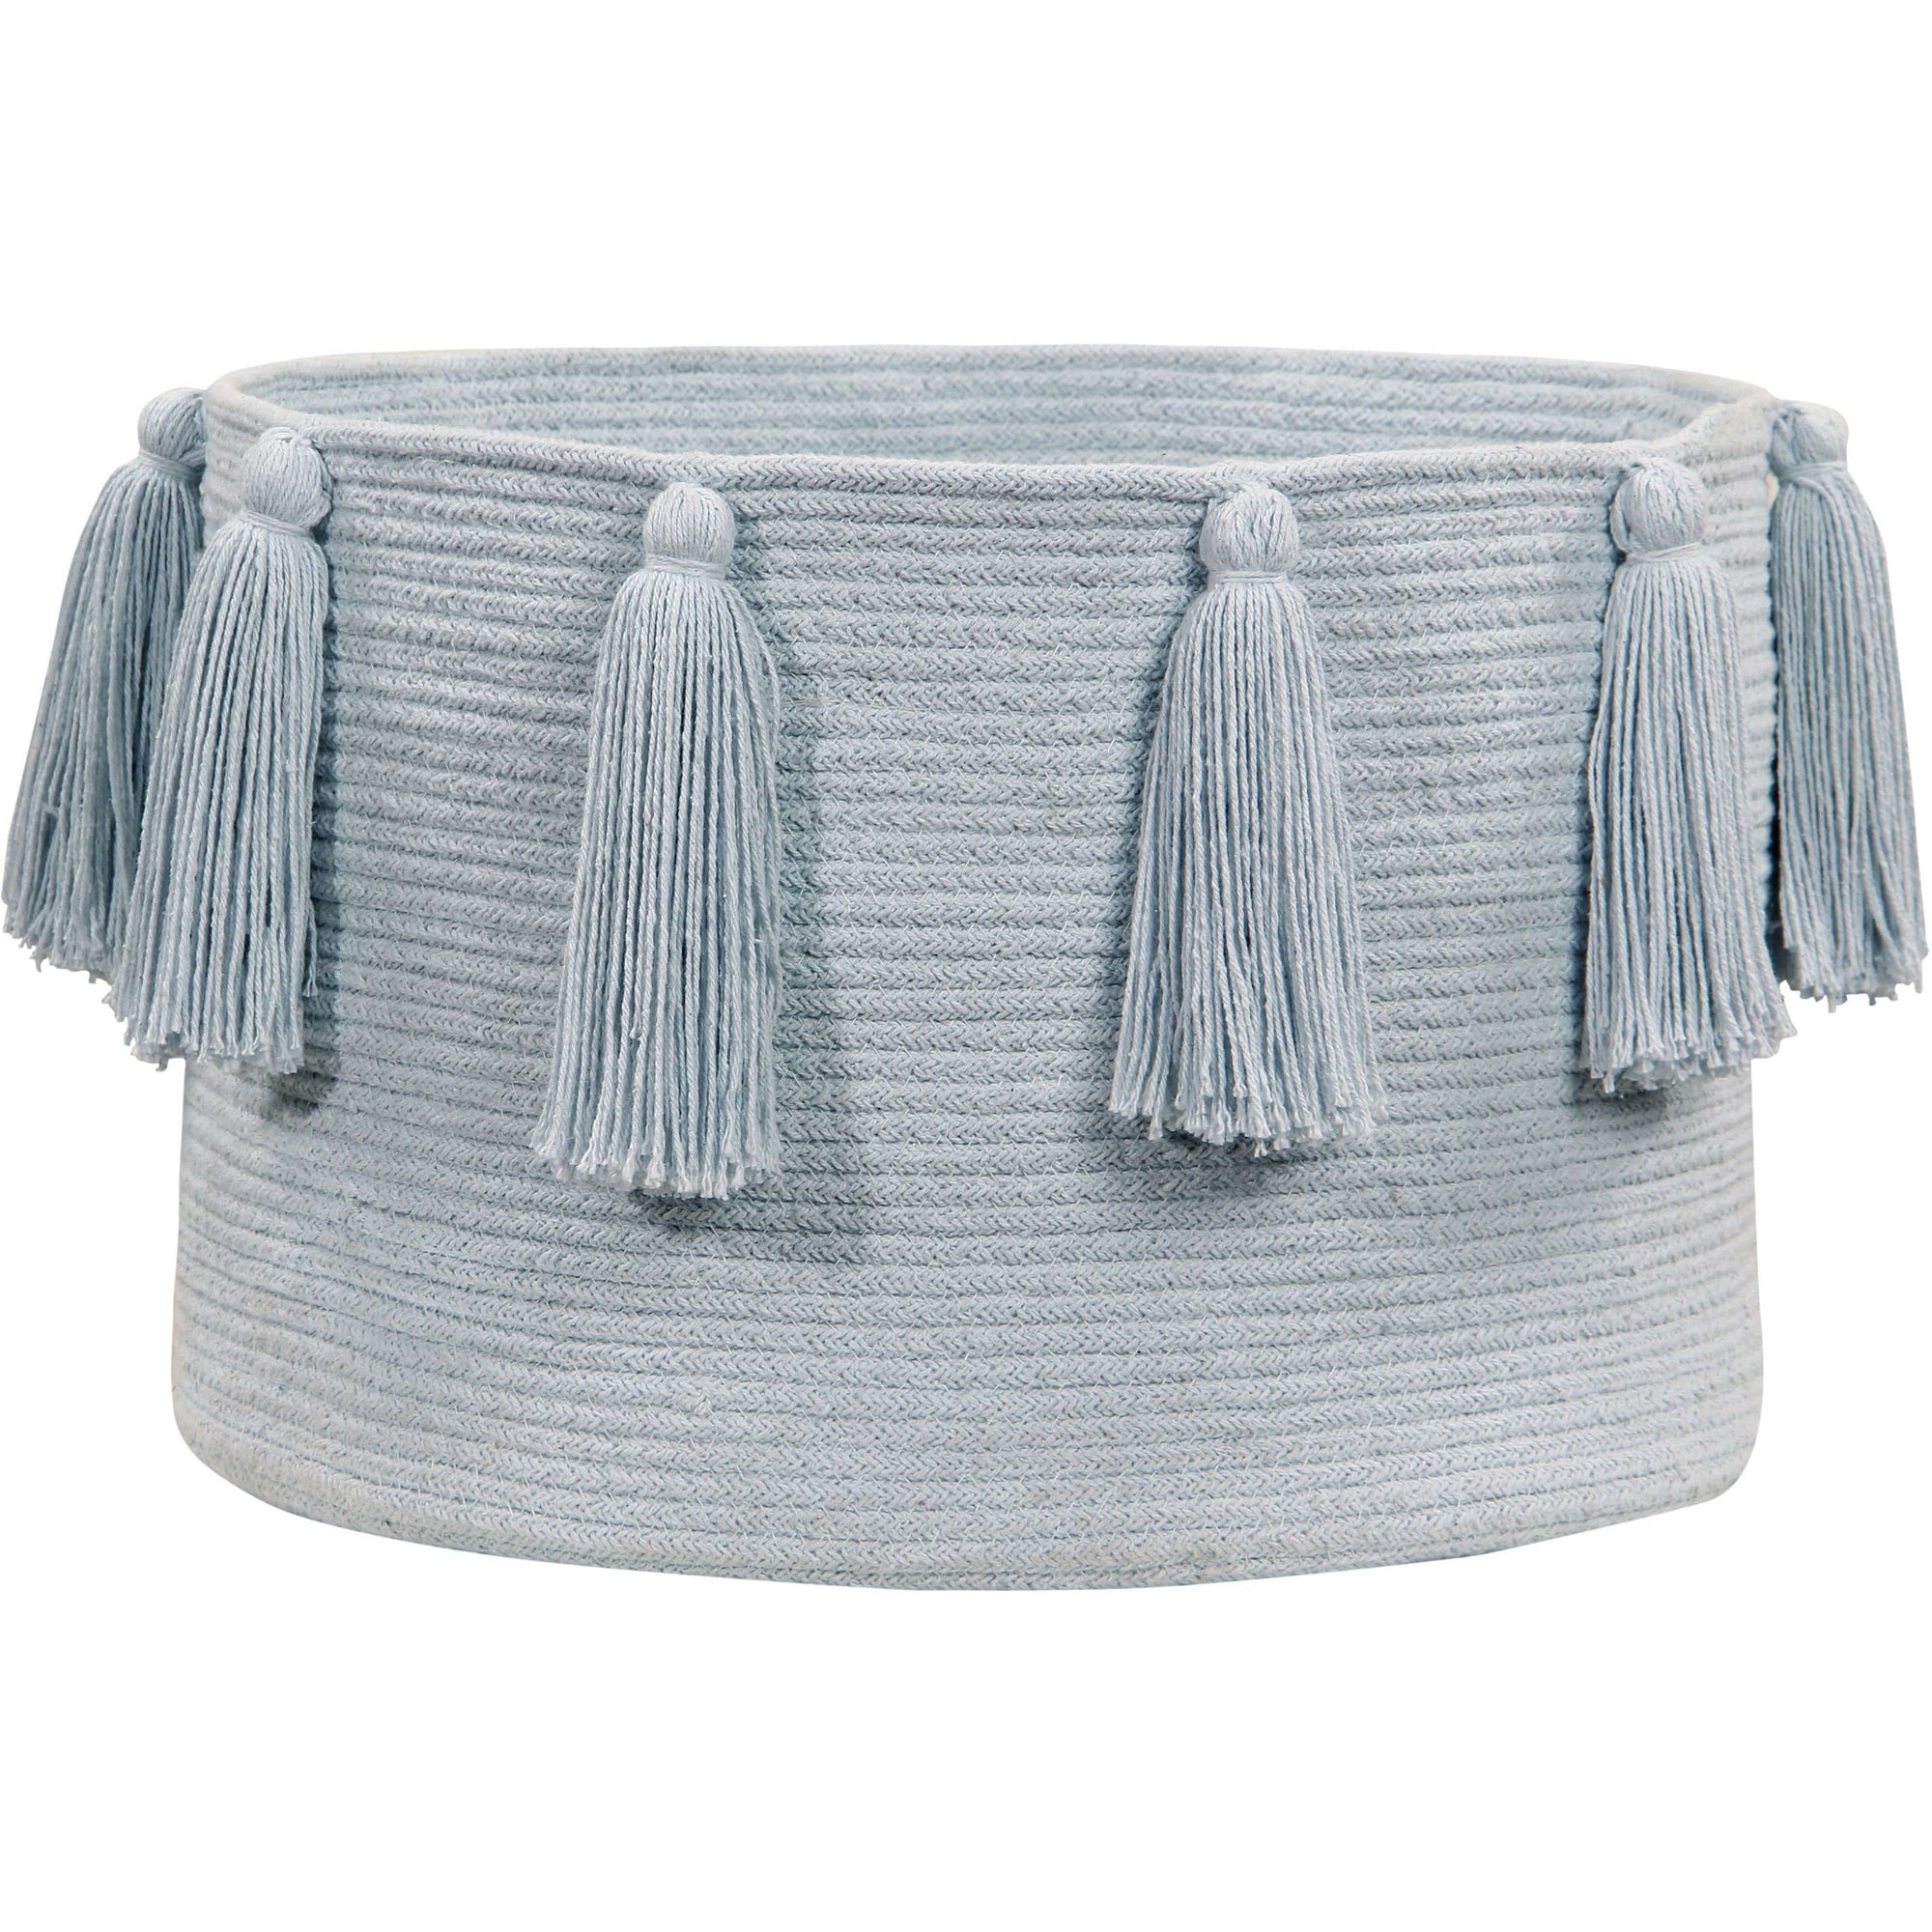 Rugs by Roo | Lorena Canals Tassels Soft Blue Basket-BSK-TAS-BL